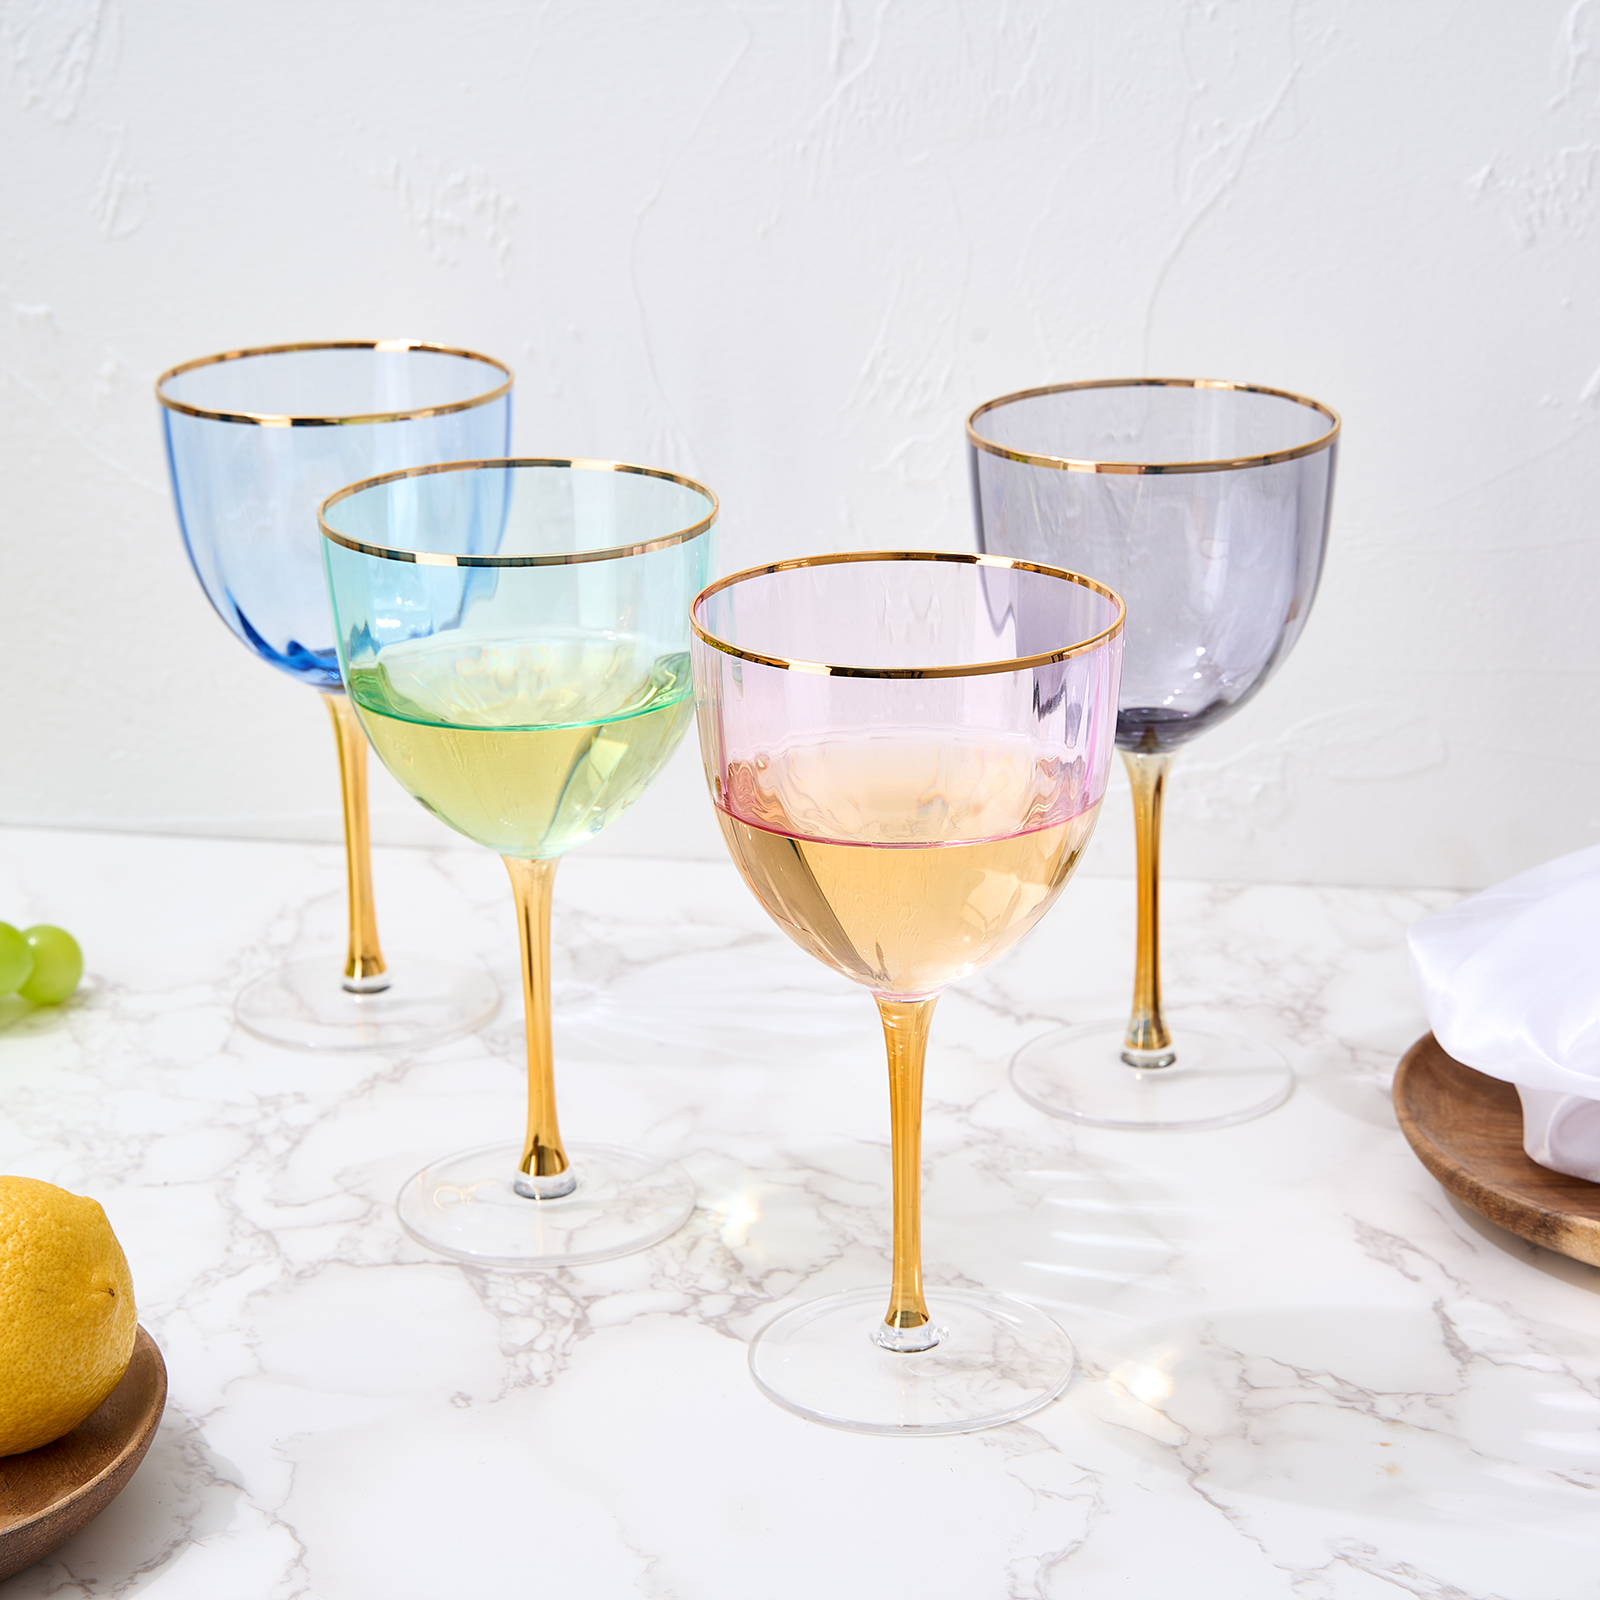 Set 5 Art Deco Stems Vintage Crystal Glass Water or Wine Goblets